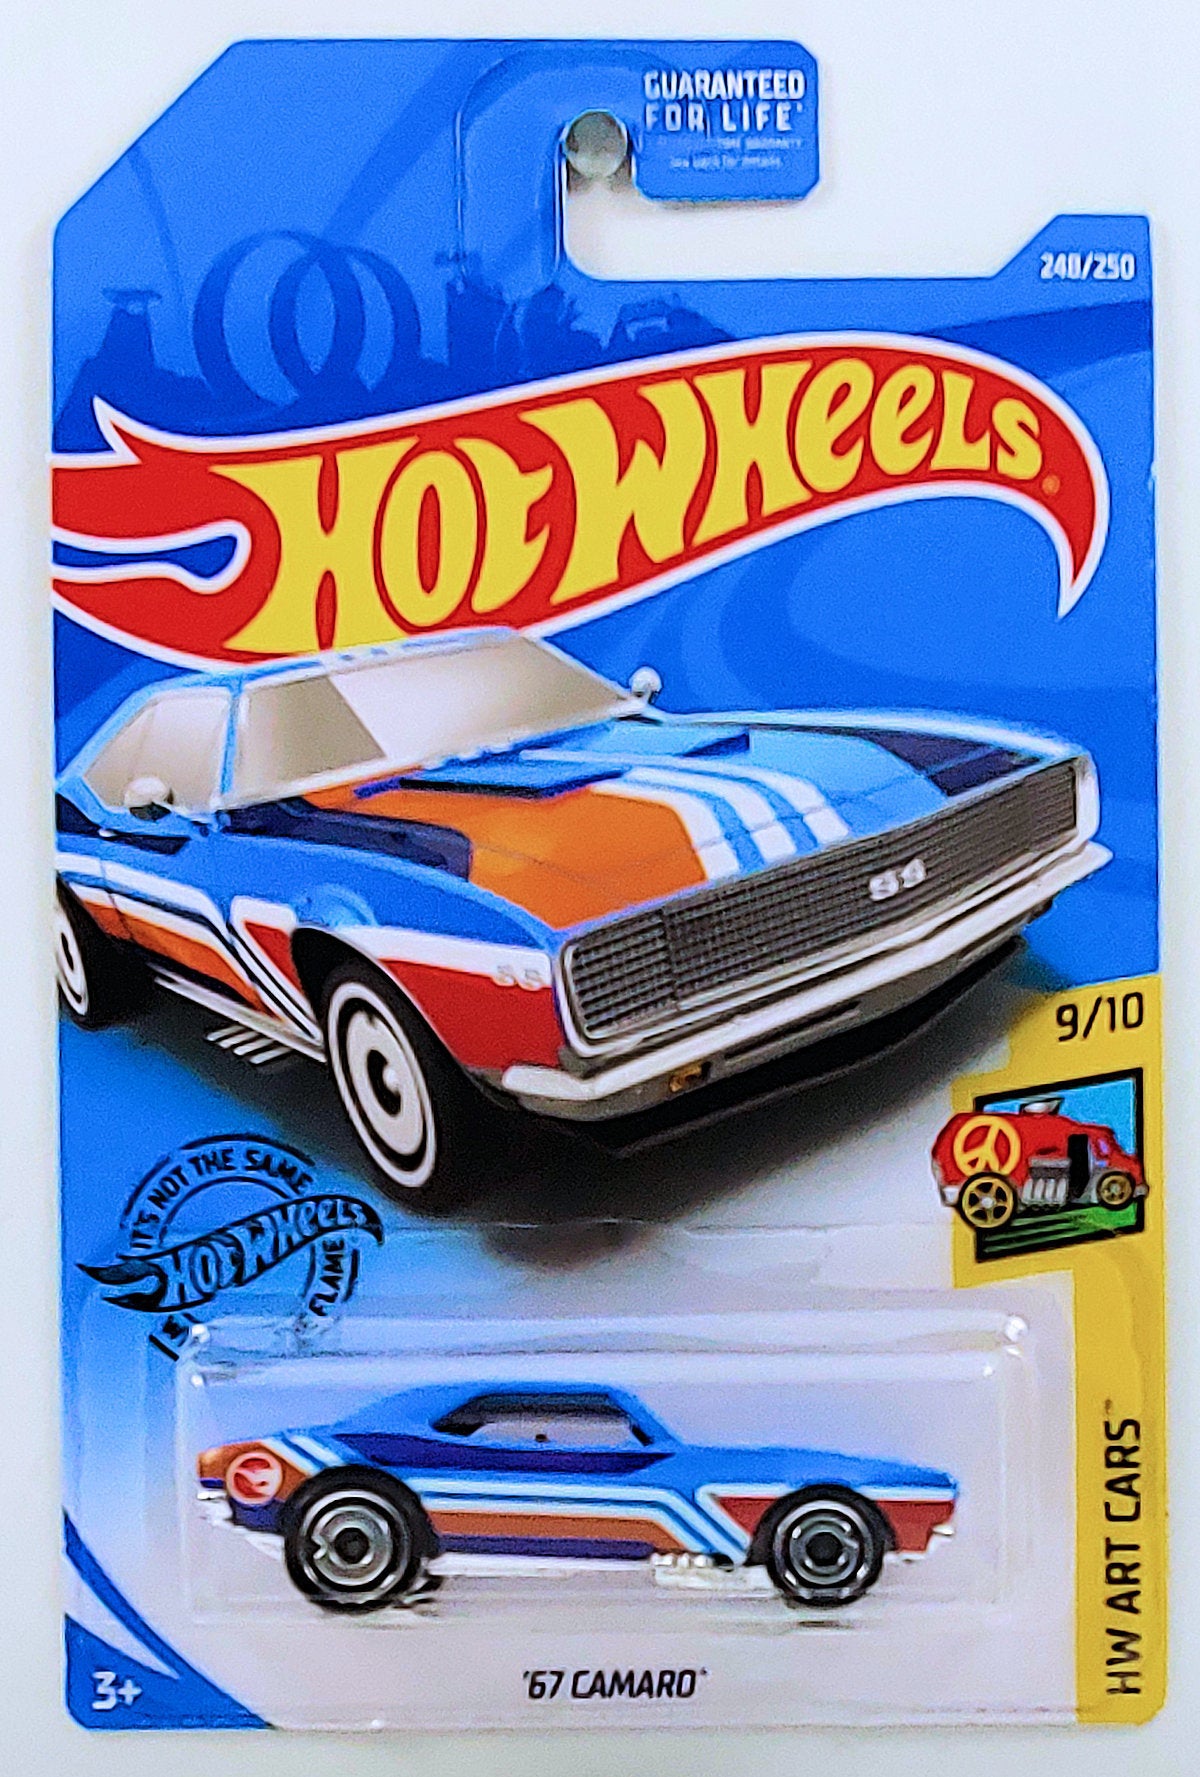 Hot Wheels 2019 - Collector # 248/250 - HW Art Cars 9/10 - Treasure Hunts - '67 Camaro - Blue - USA